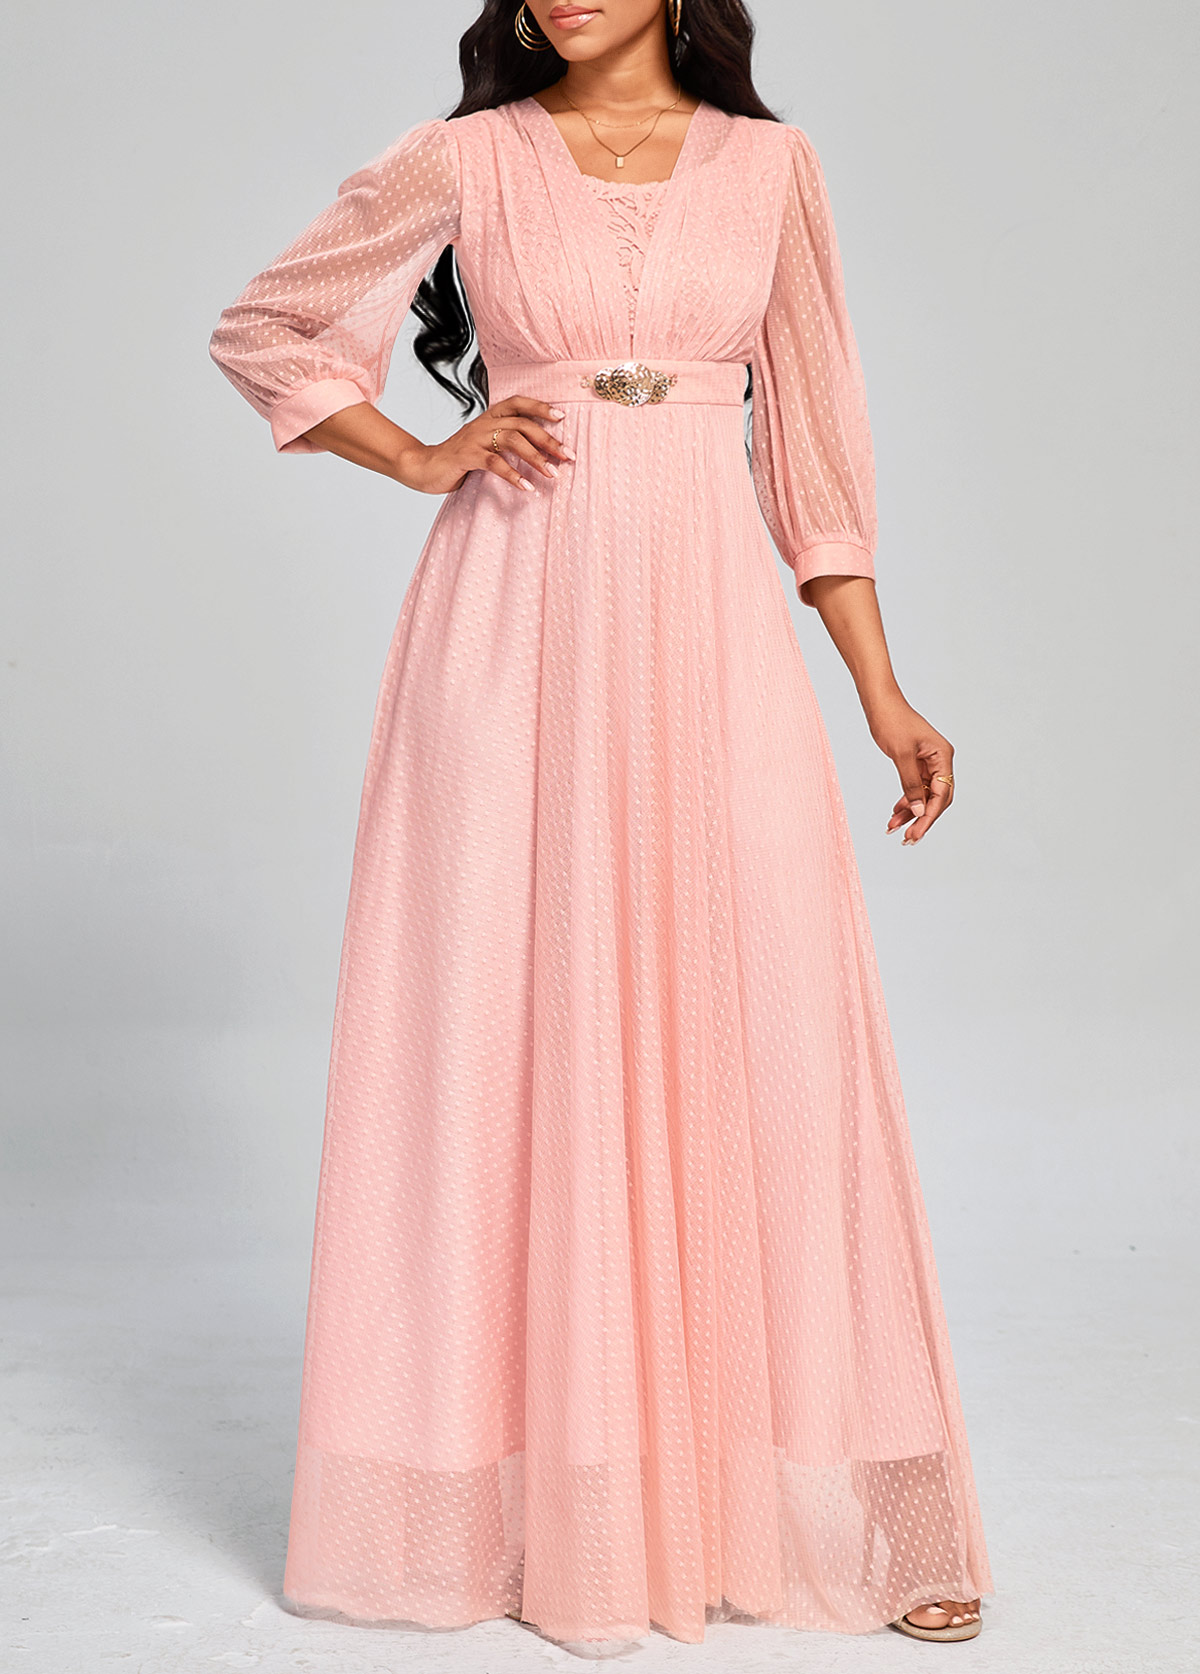 ROTITA Mesh Pink Three Quarter Length Sleeve Dress